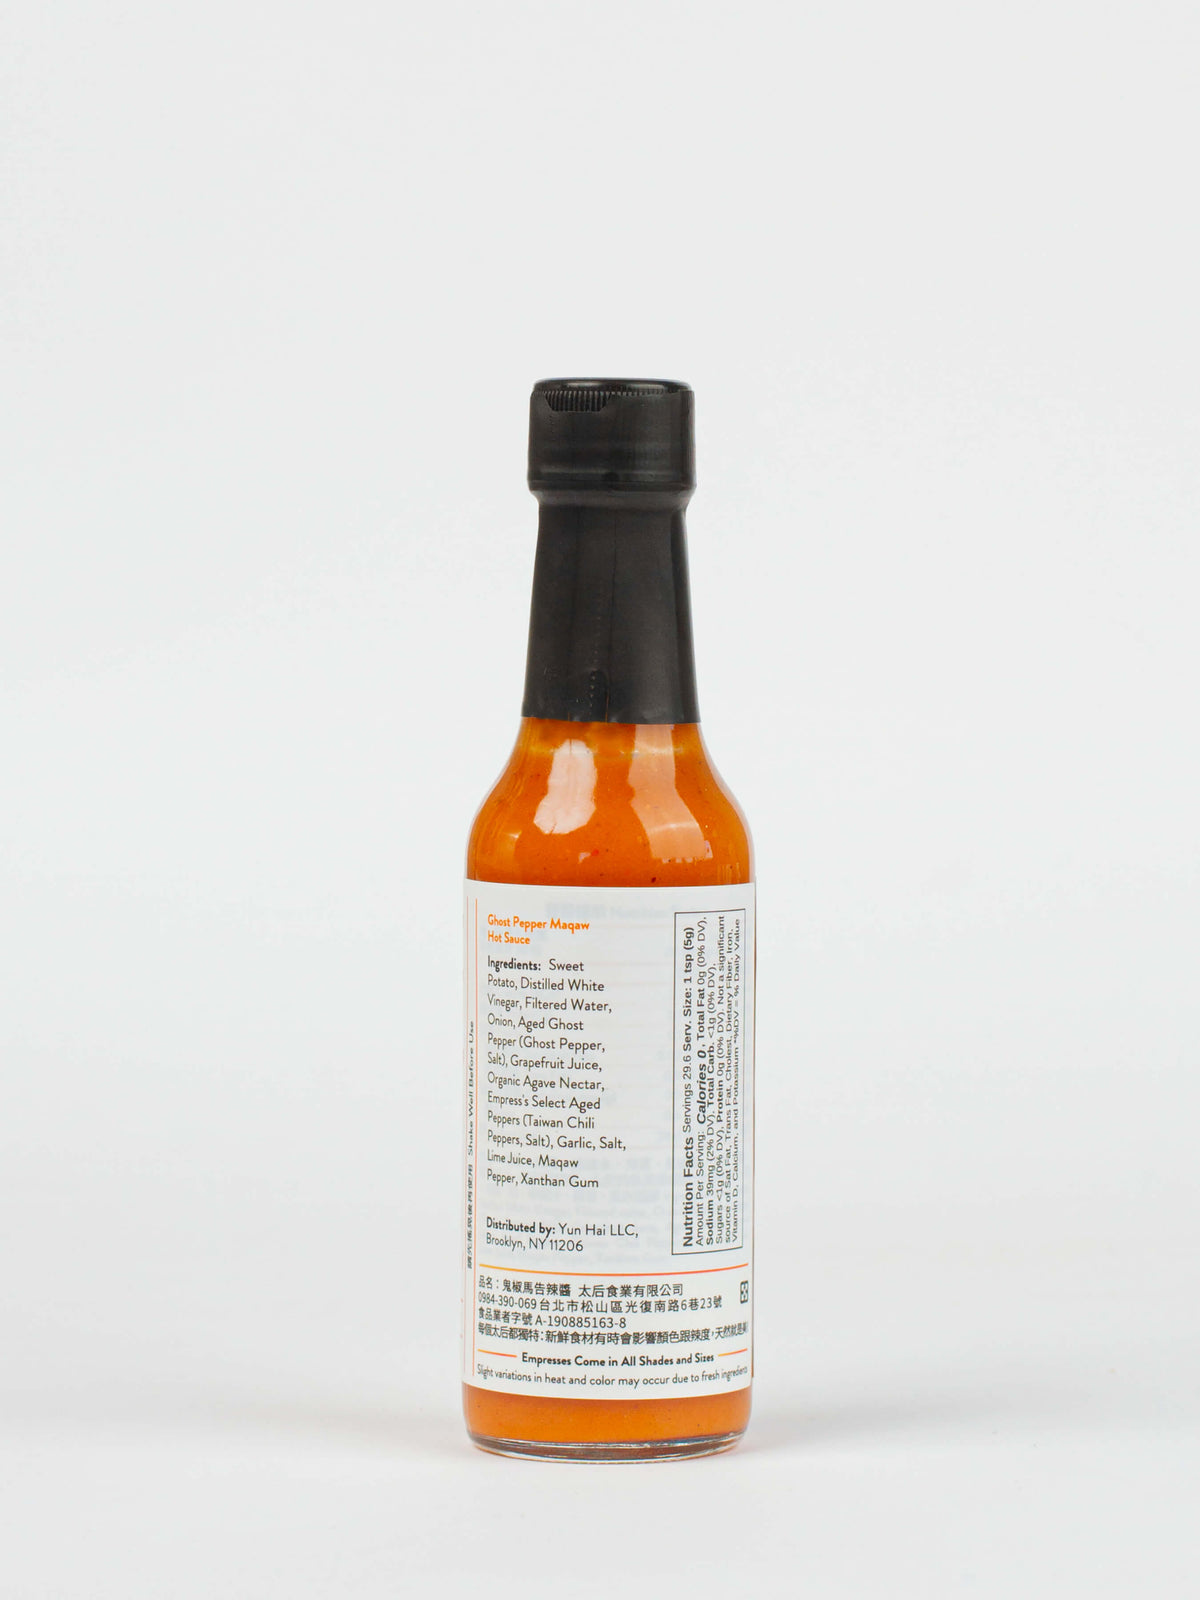 scorpion pepper hot sauce